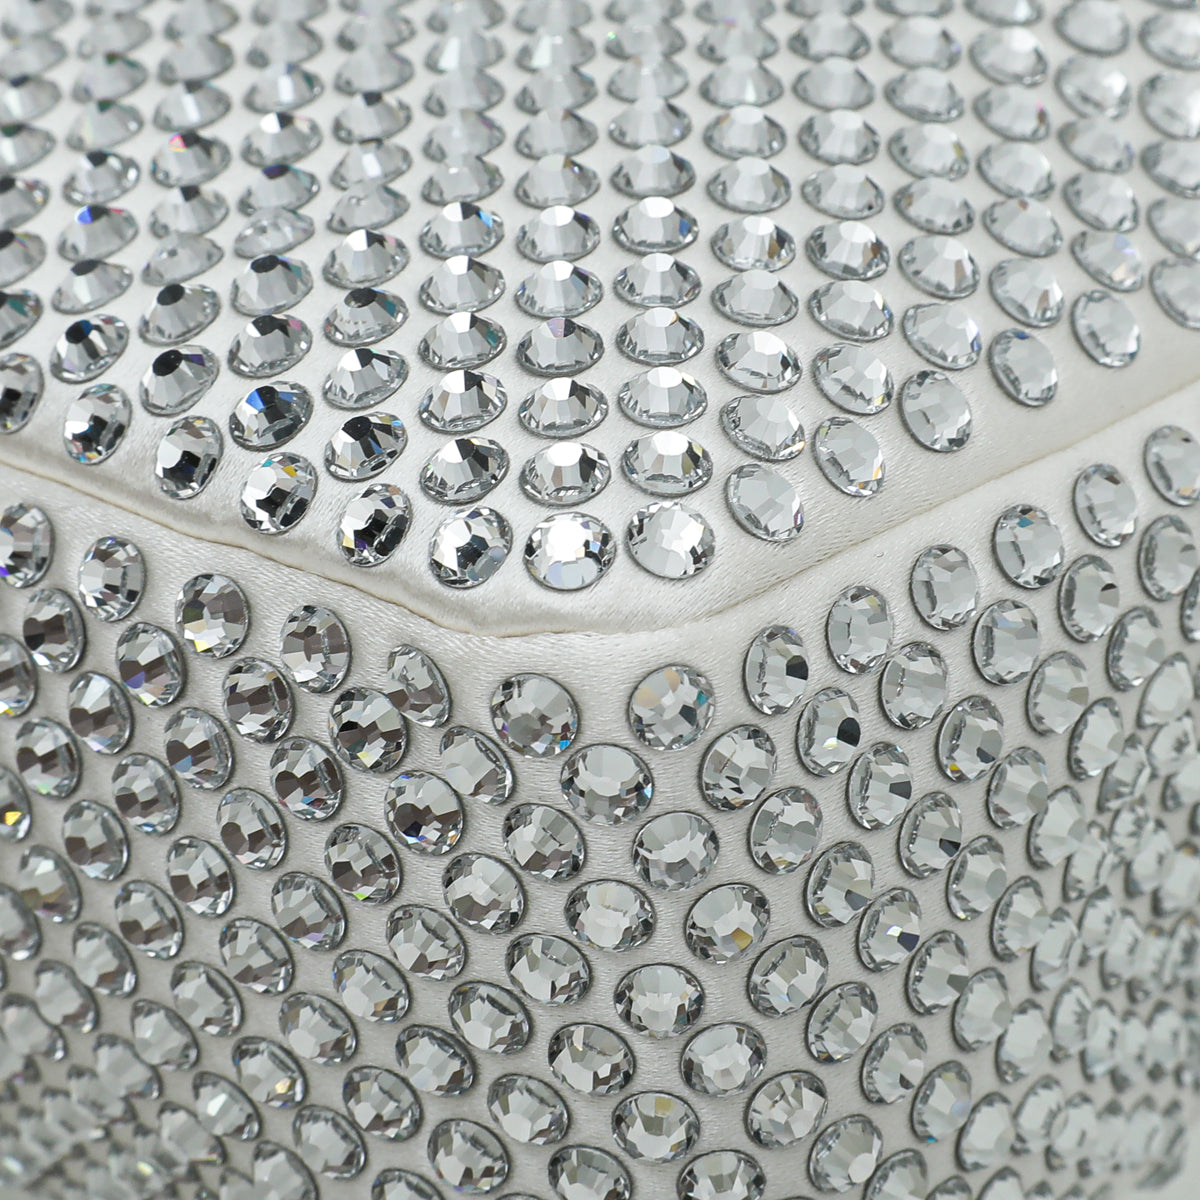 Prada White Satin Re-Edition 2000 Mini Bag w/Artificial Crystal